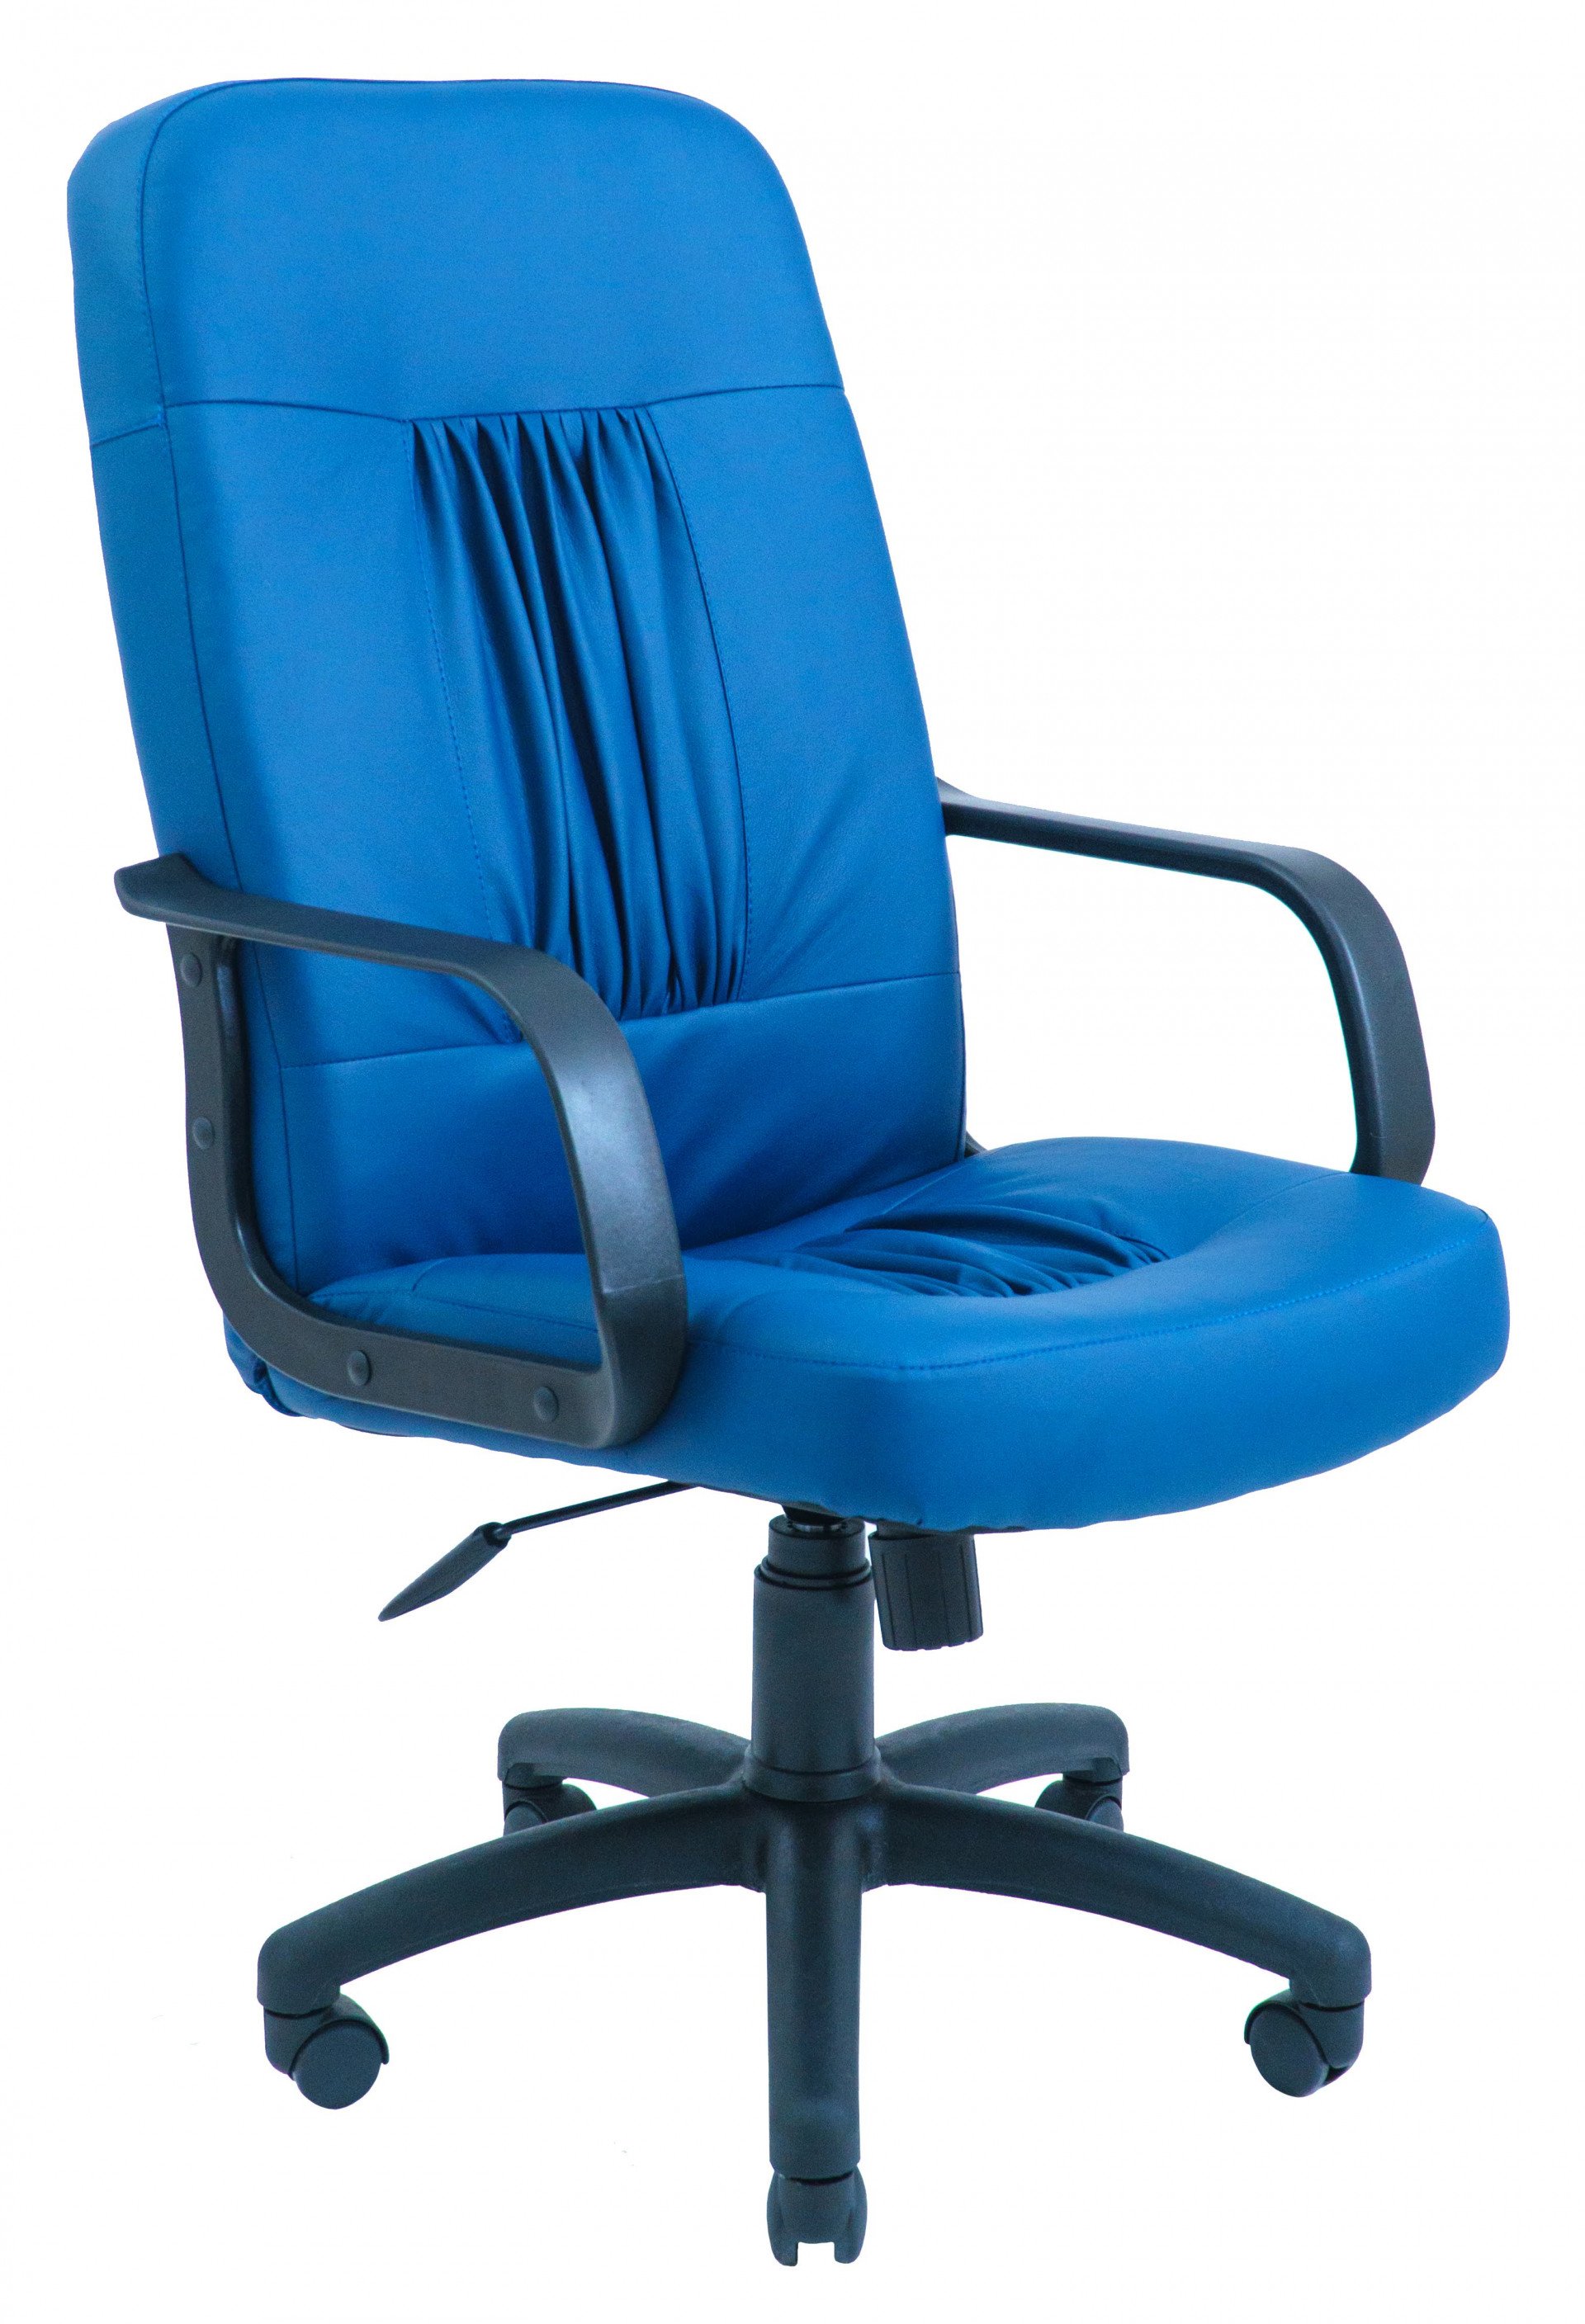 Кресло офисное  RCH- Ницца